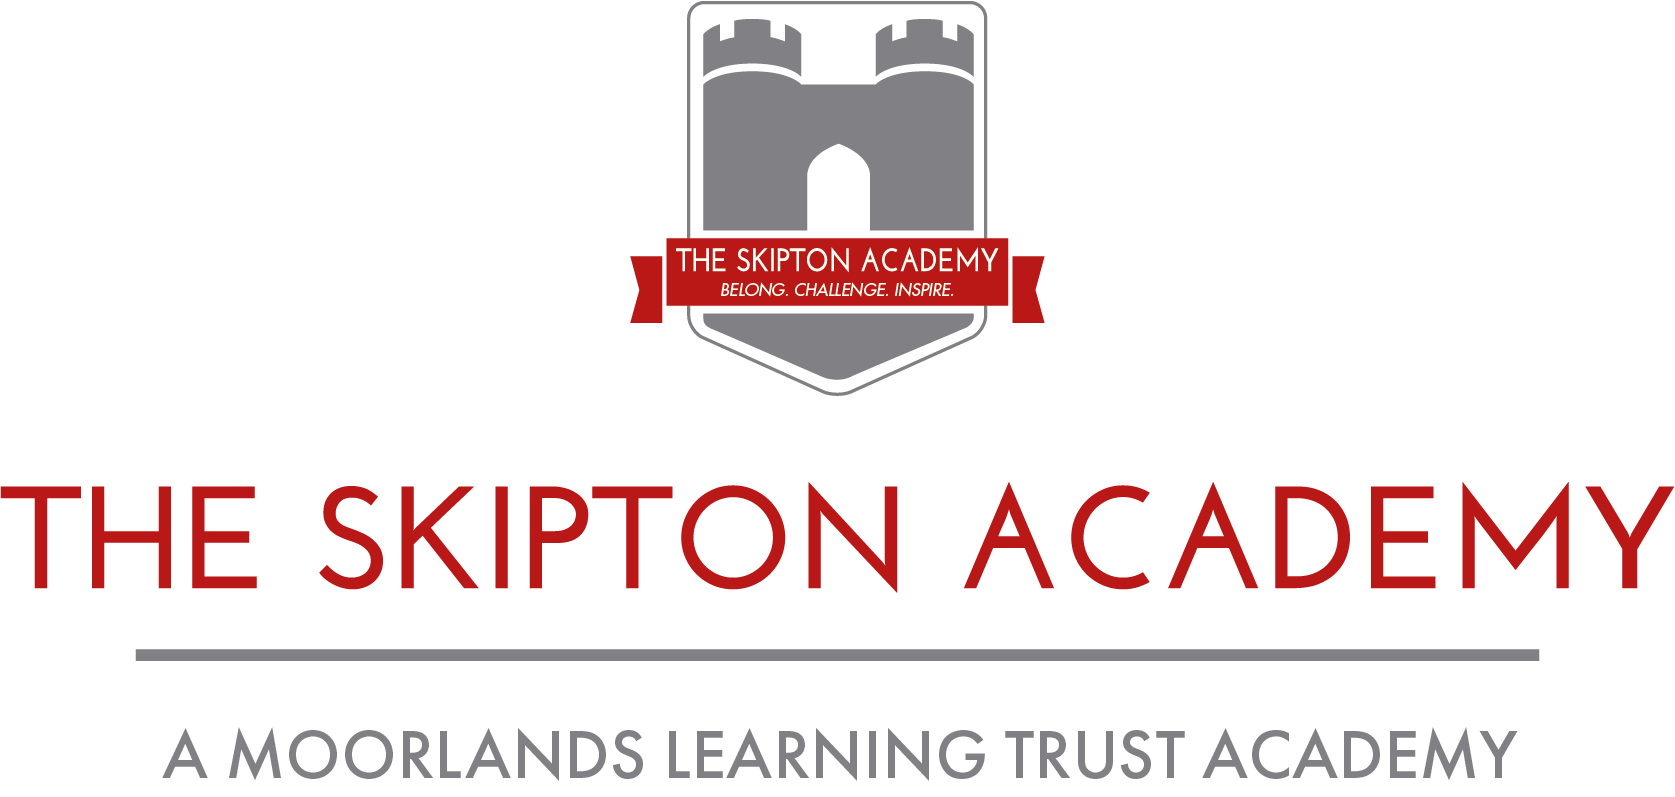 The Skipton Academy